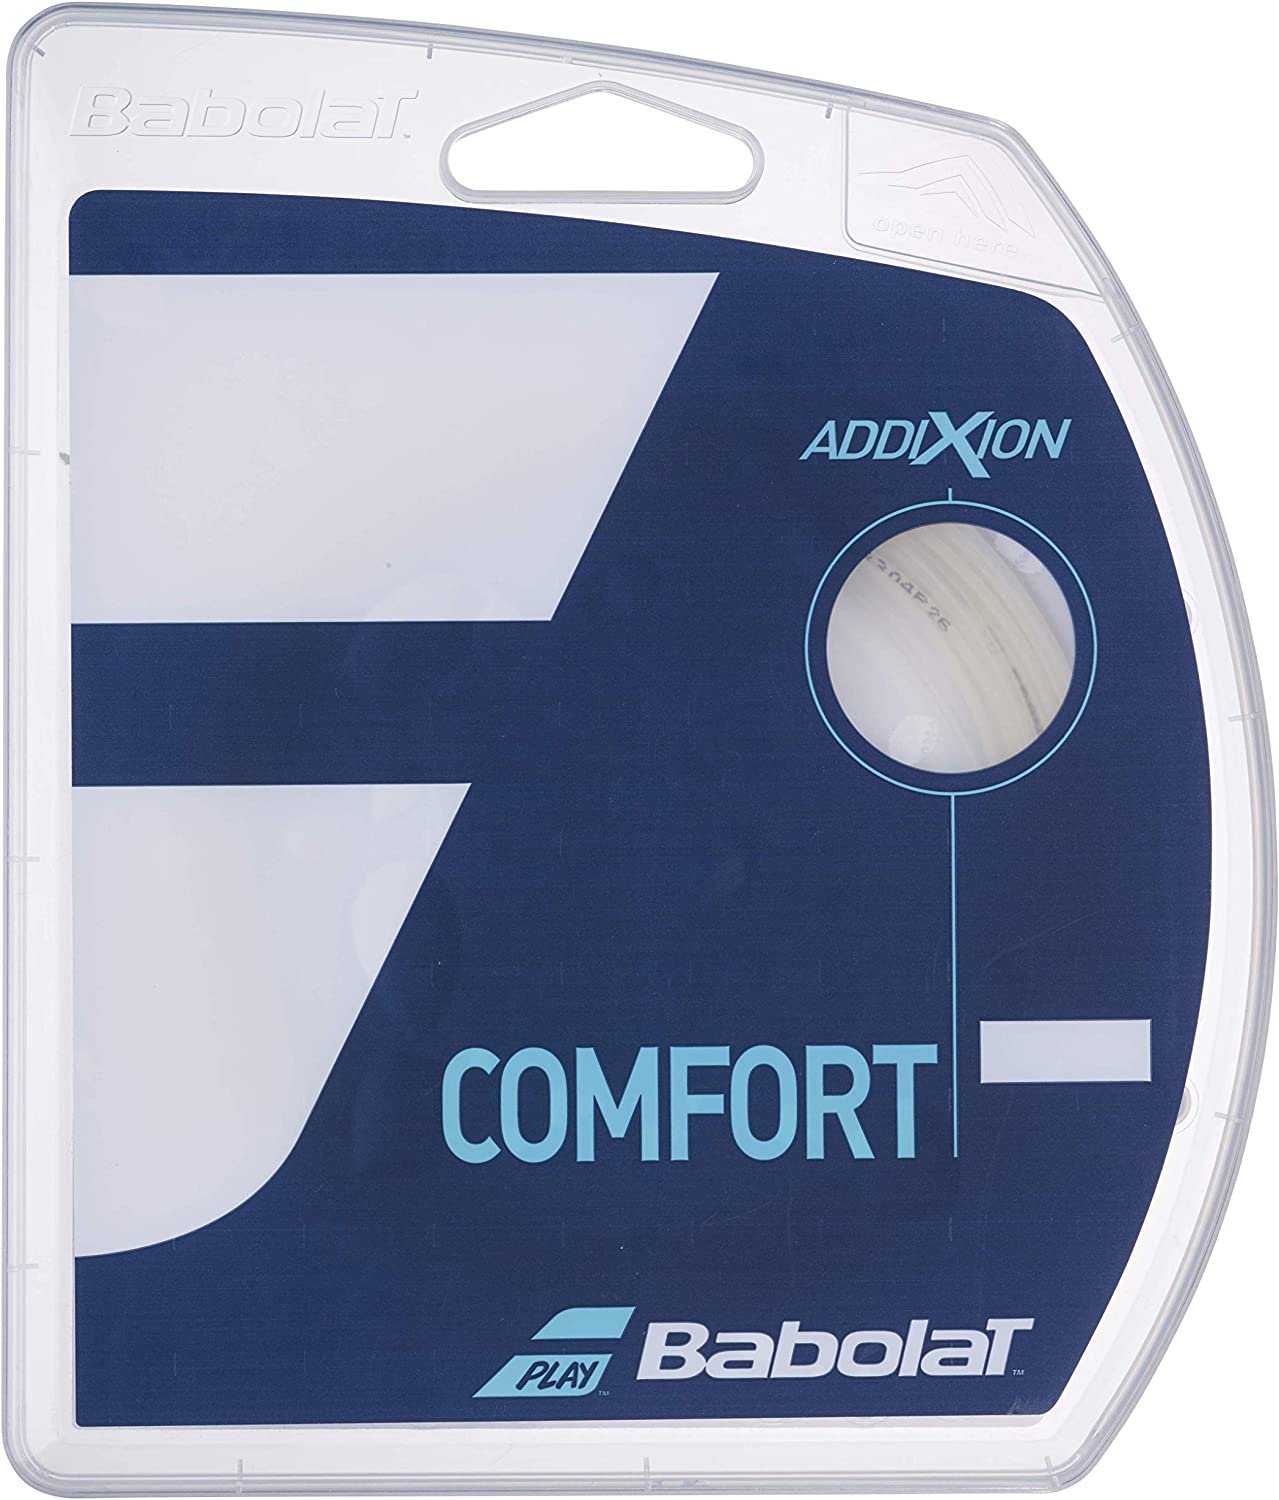 Babolat Unisex – Adult's Addixon Saitenset 12m - Nude Tennis String